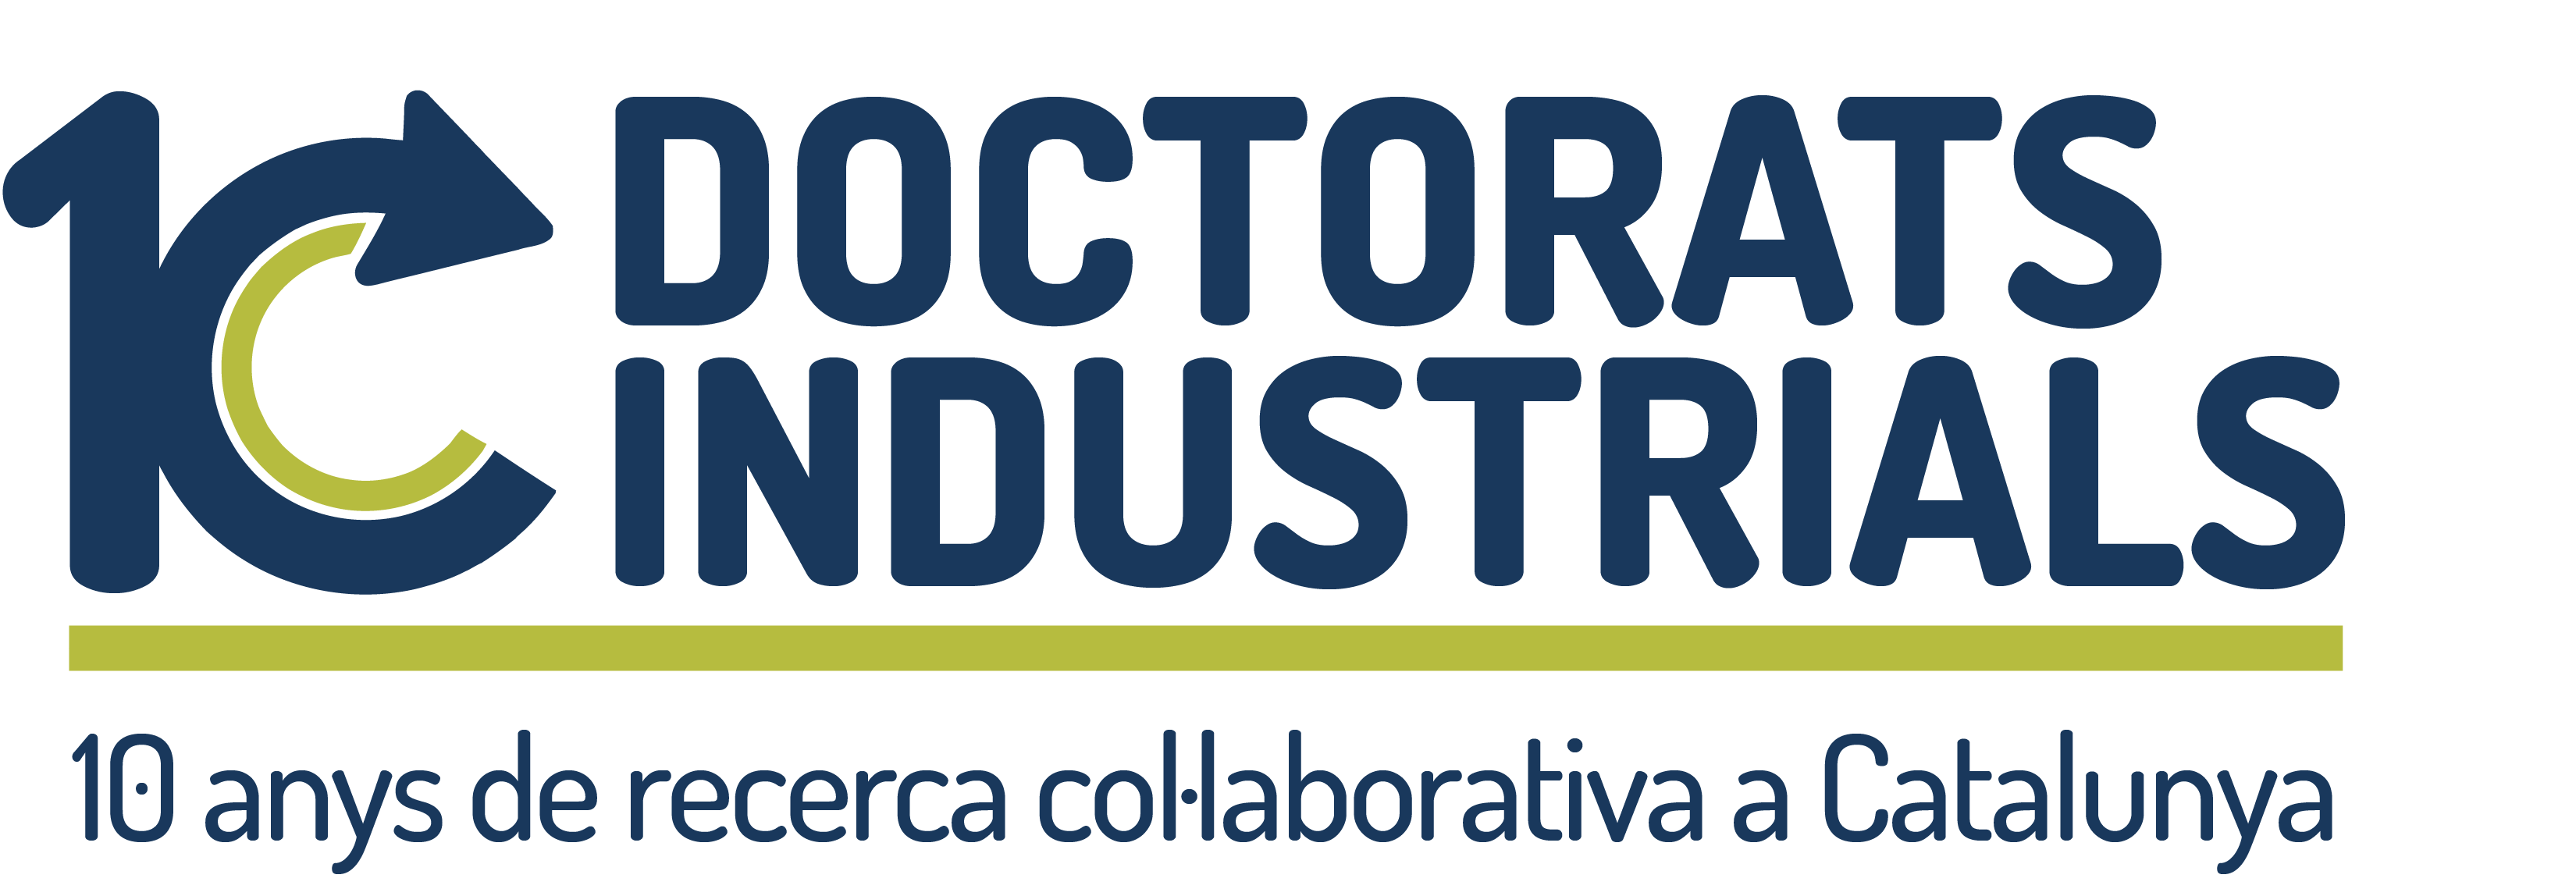 Logotip Doctorats Industrials